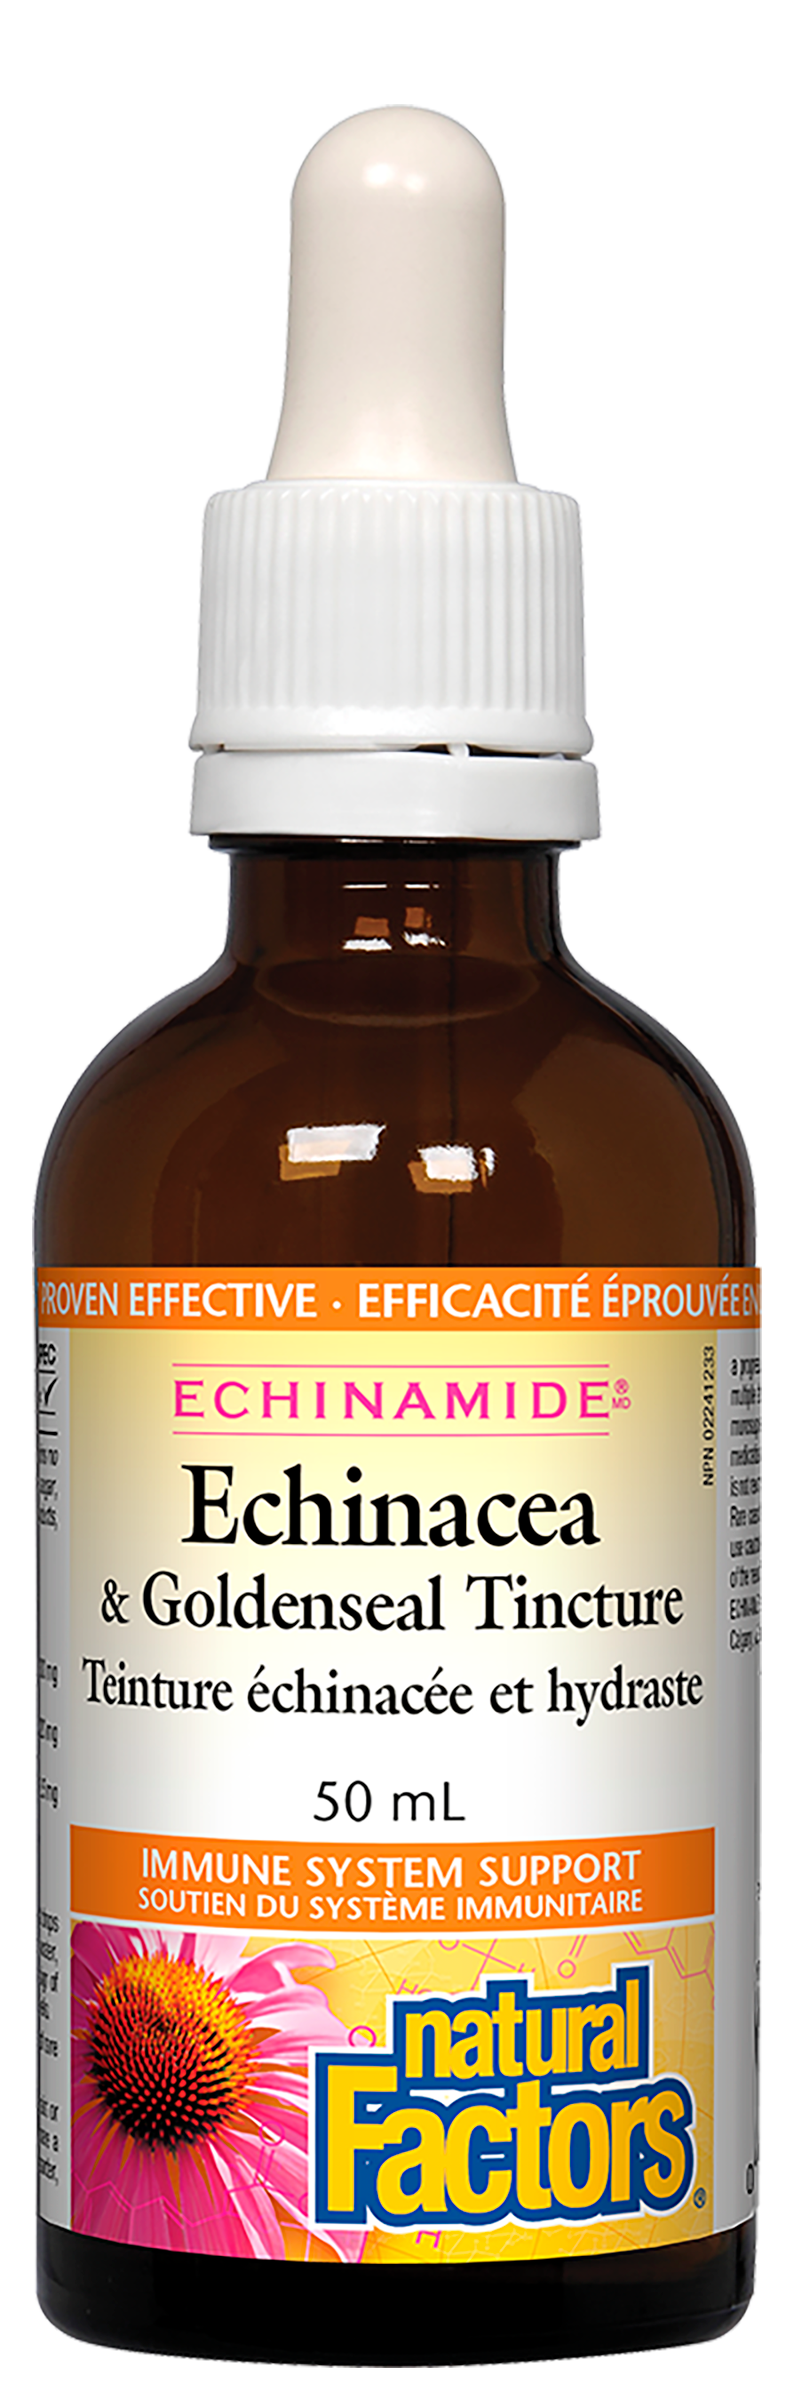 Natural Factors Echinacea & Goldenseal 50ml Tincture